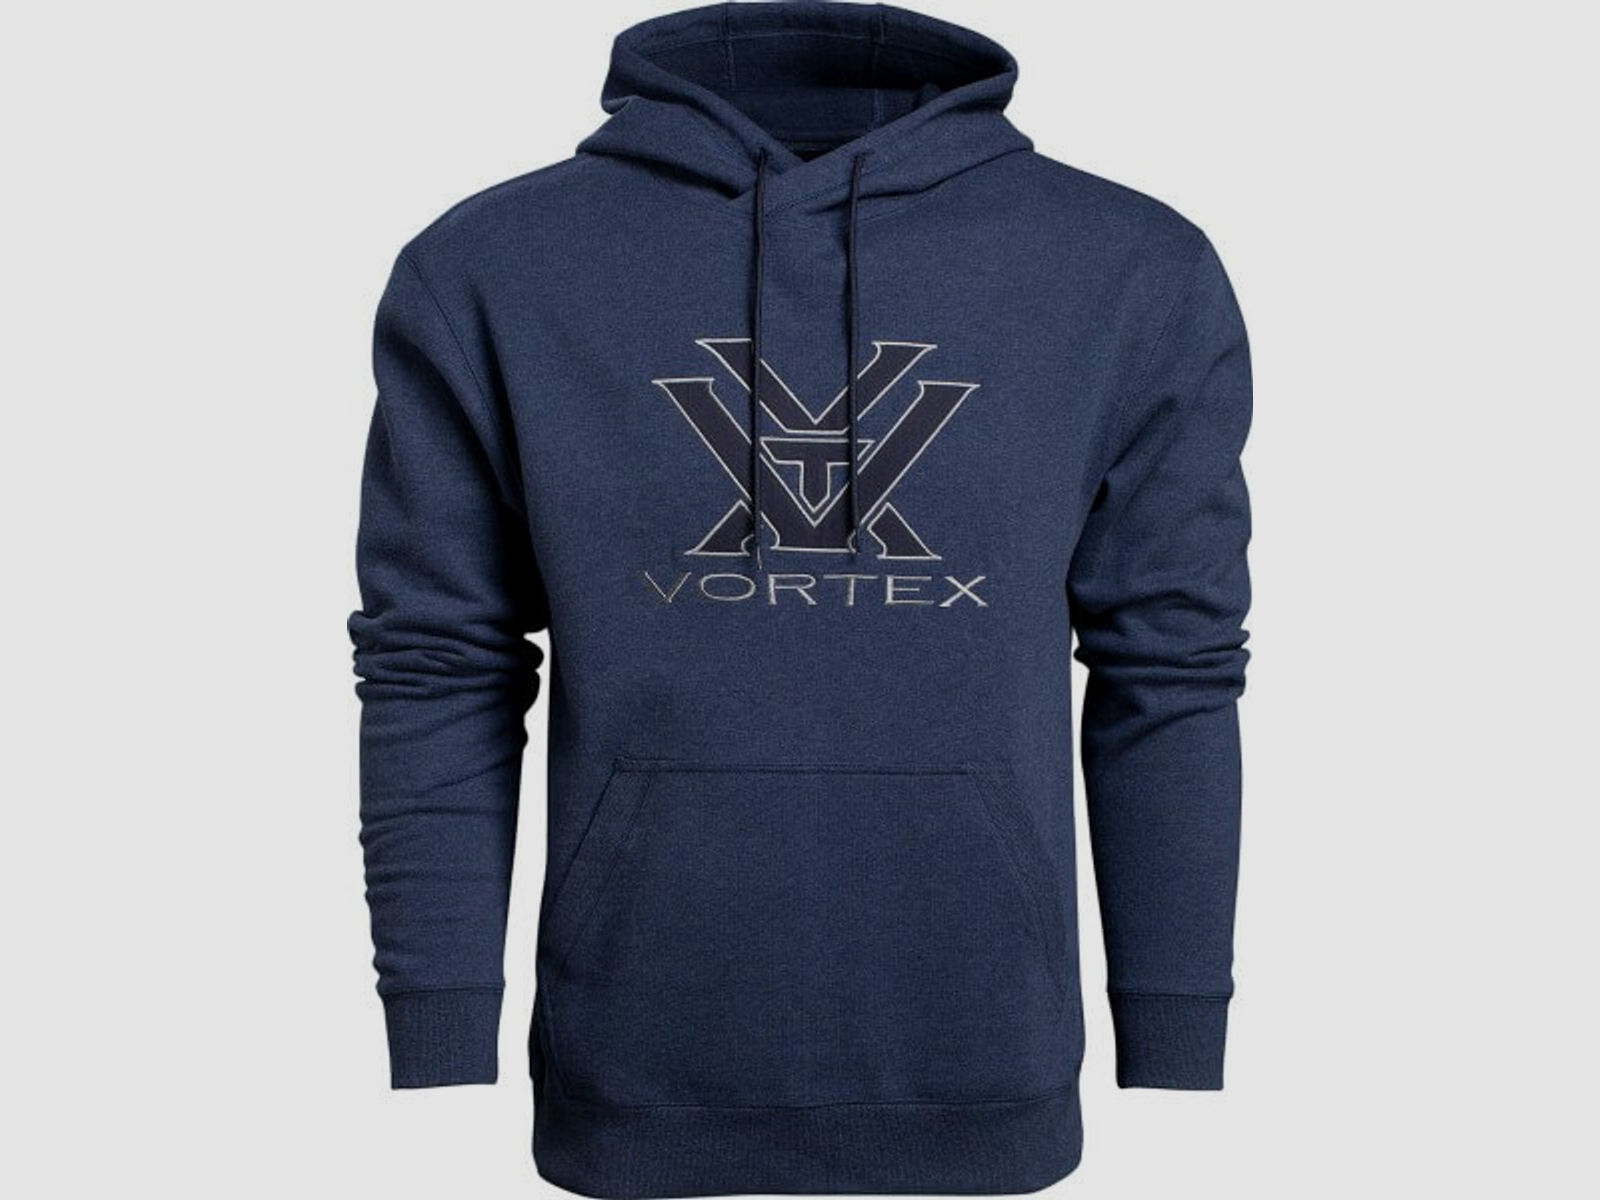 Vortex Comfort Hoodie navy XL